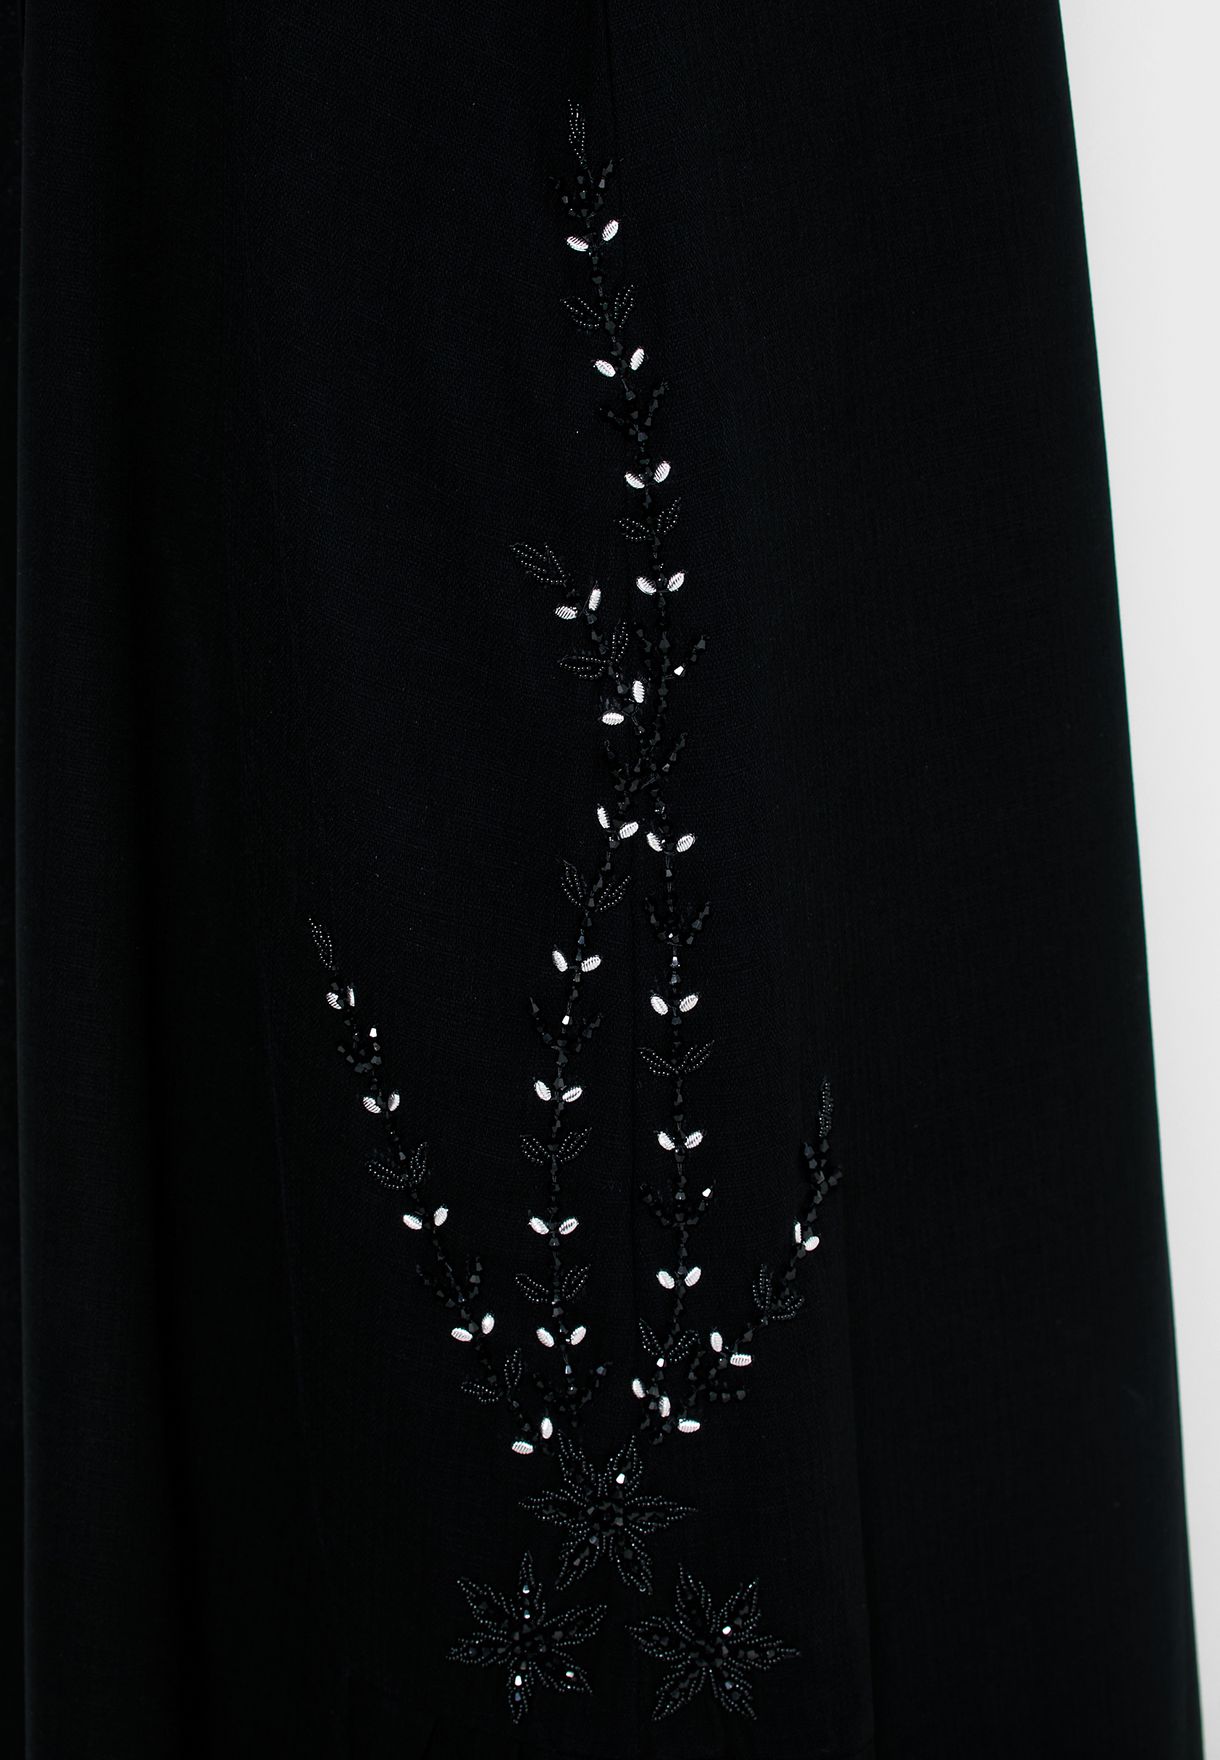 Buy Khizana black Embellished Abaya for Women in Dubai, Abu Dhabi